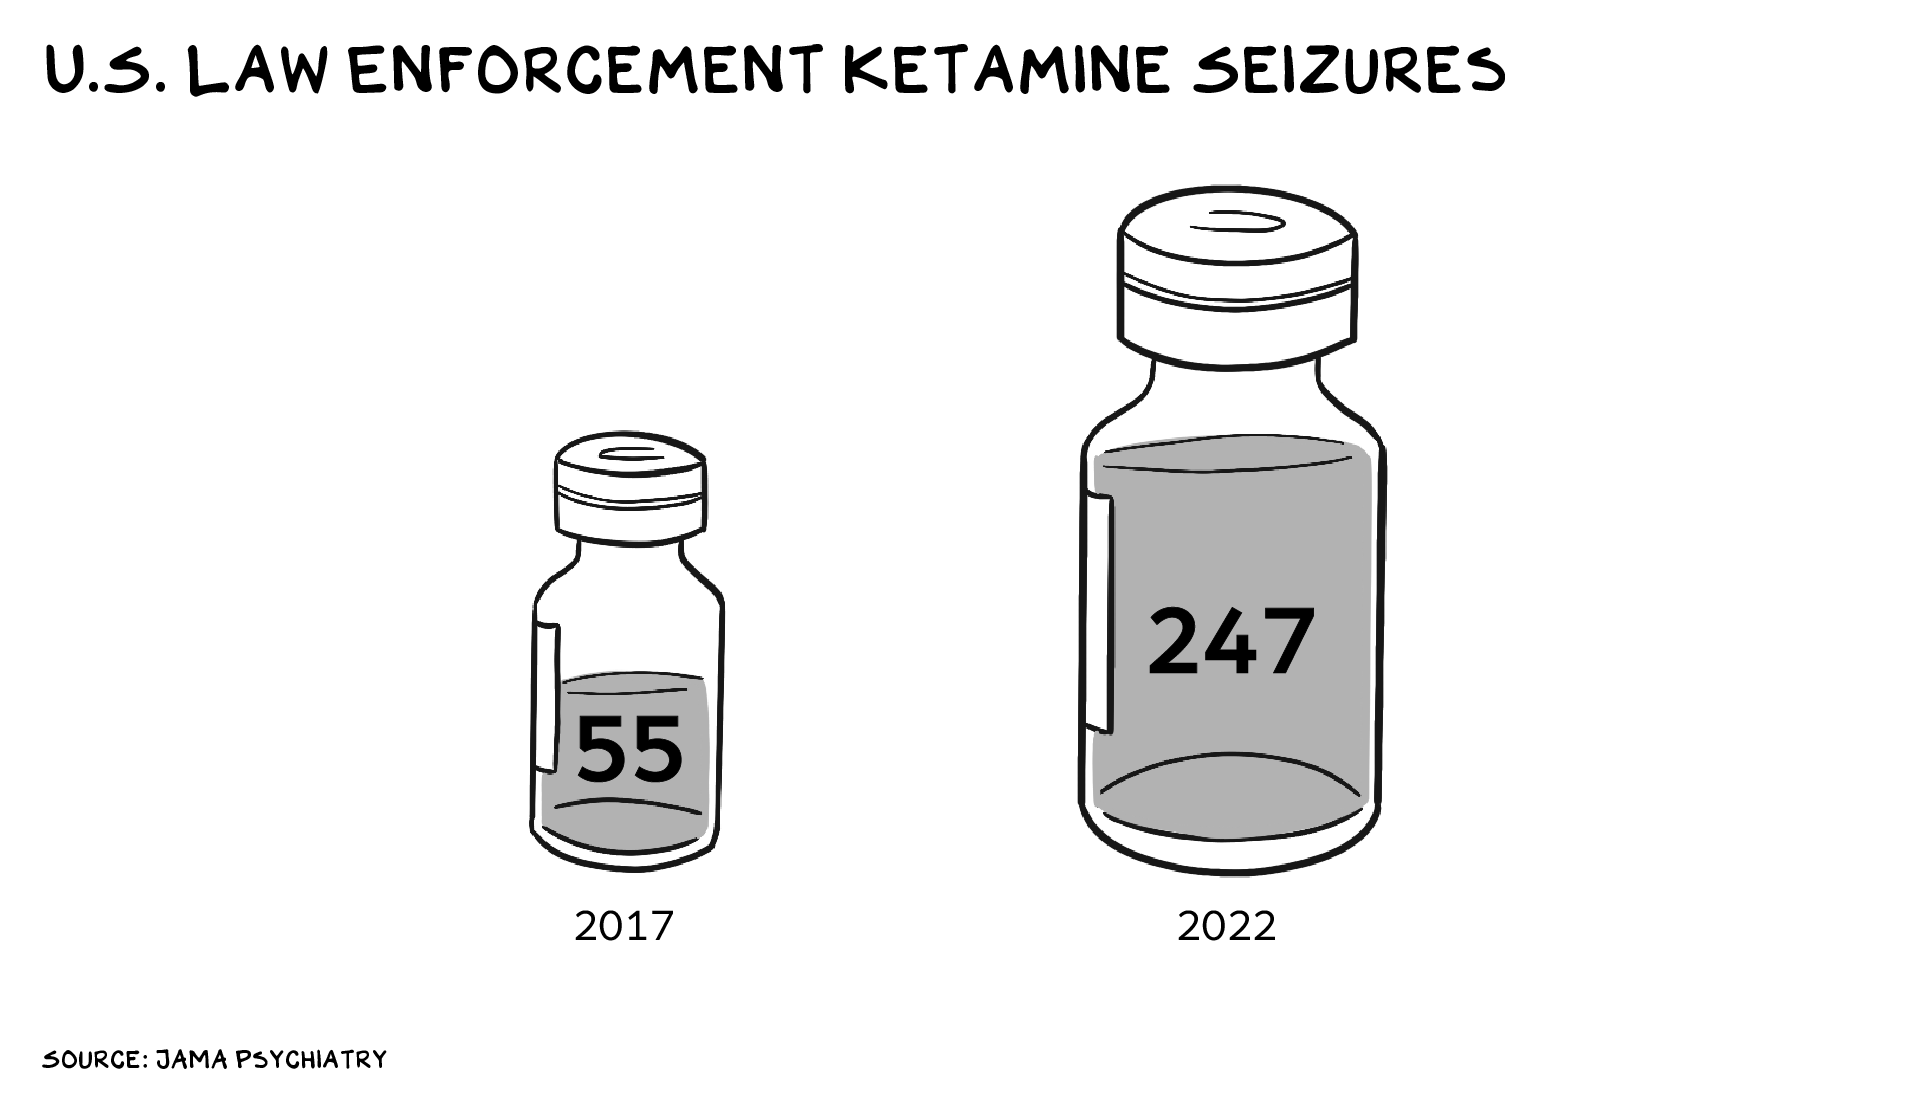 Ketamine seizures are up